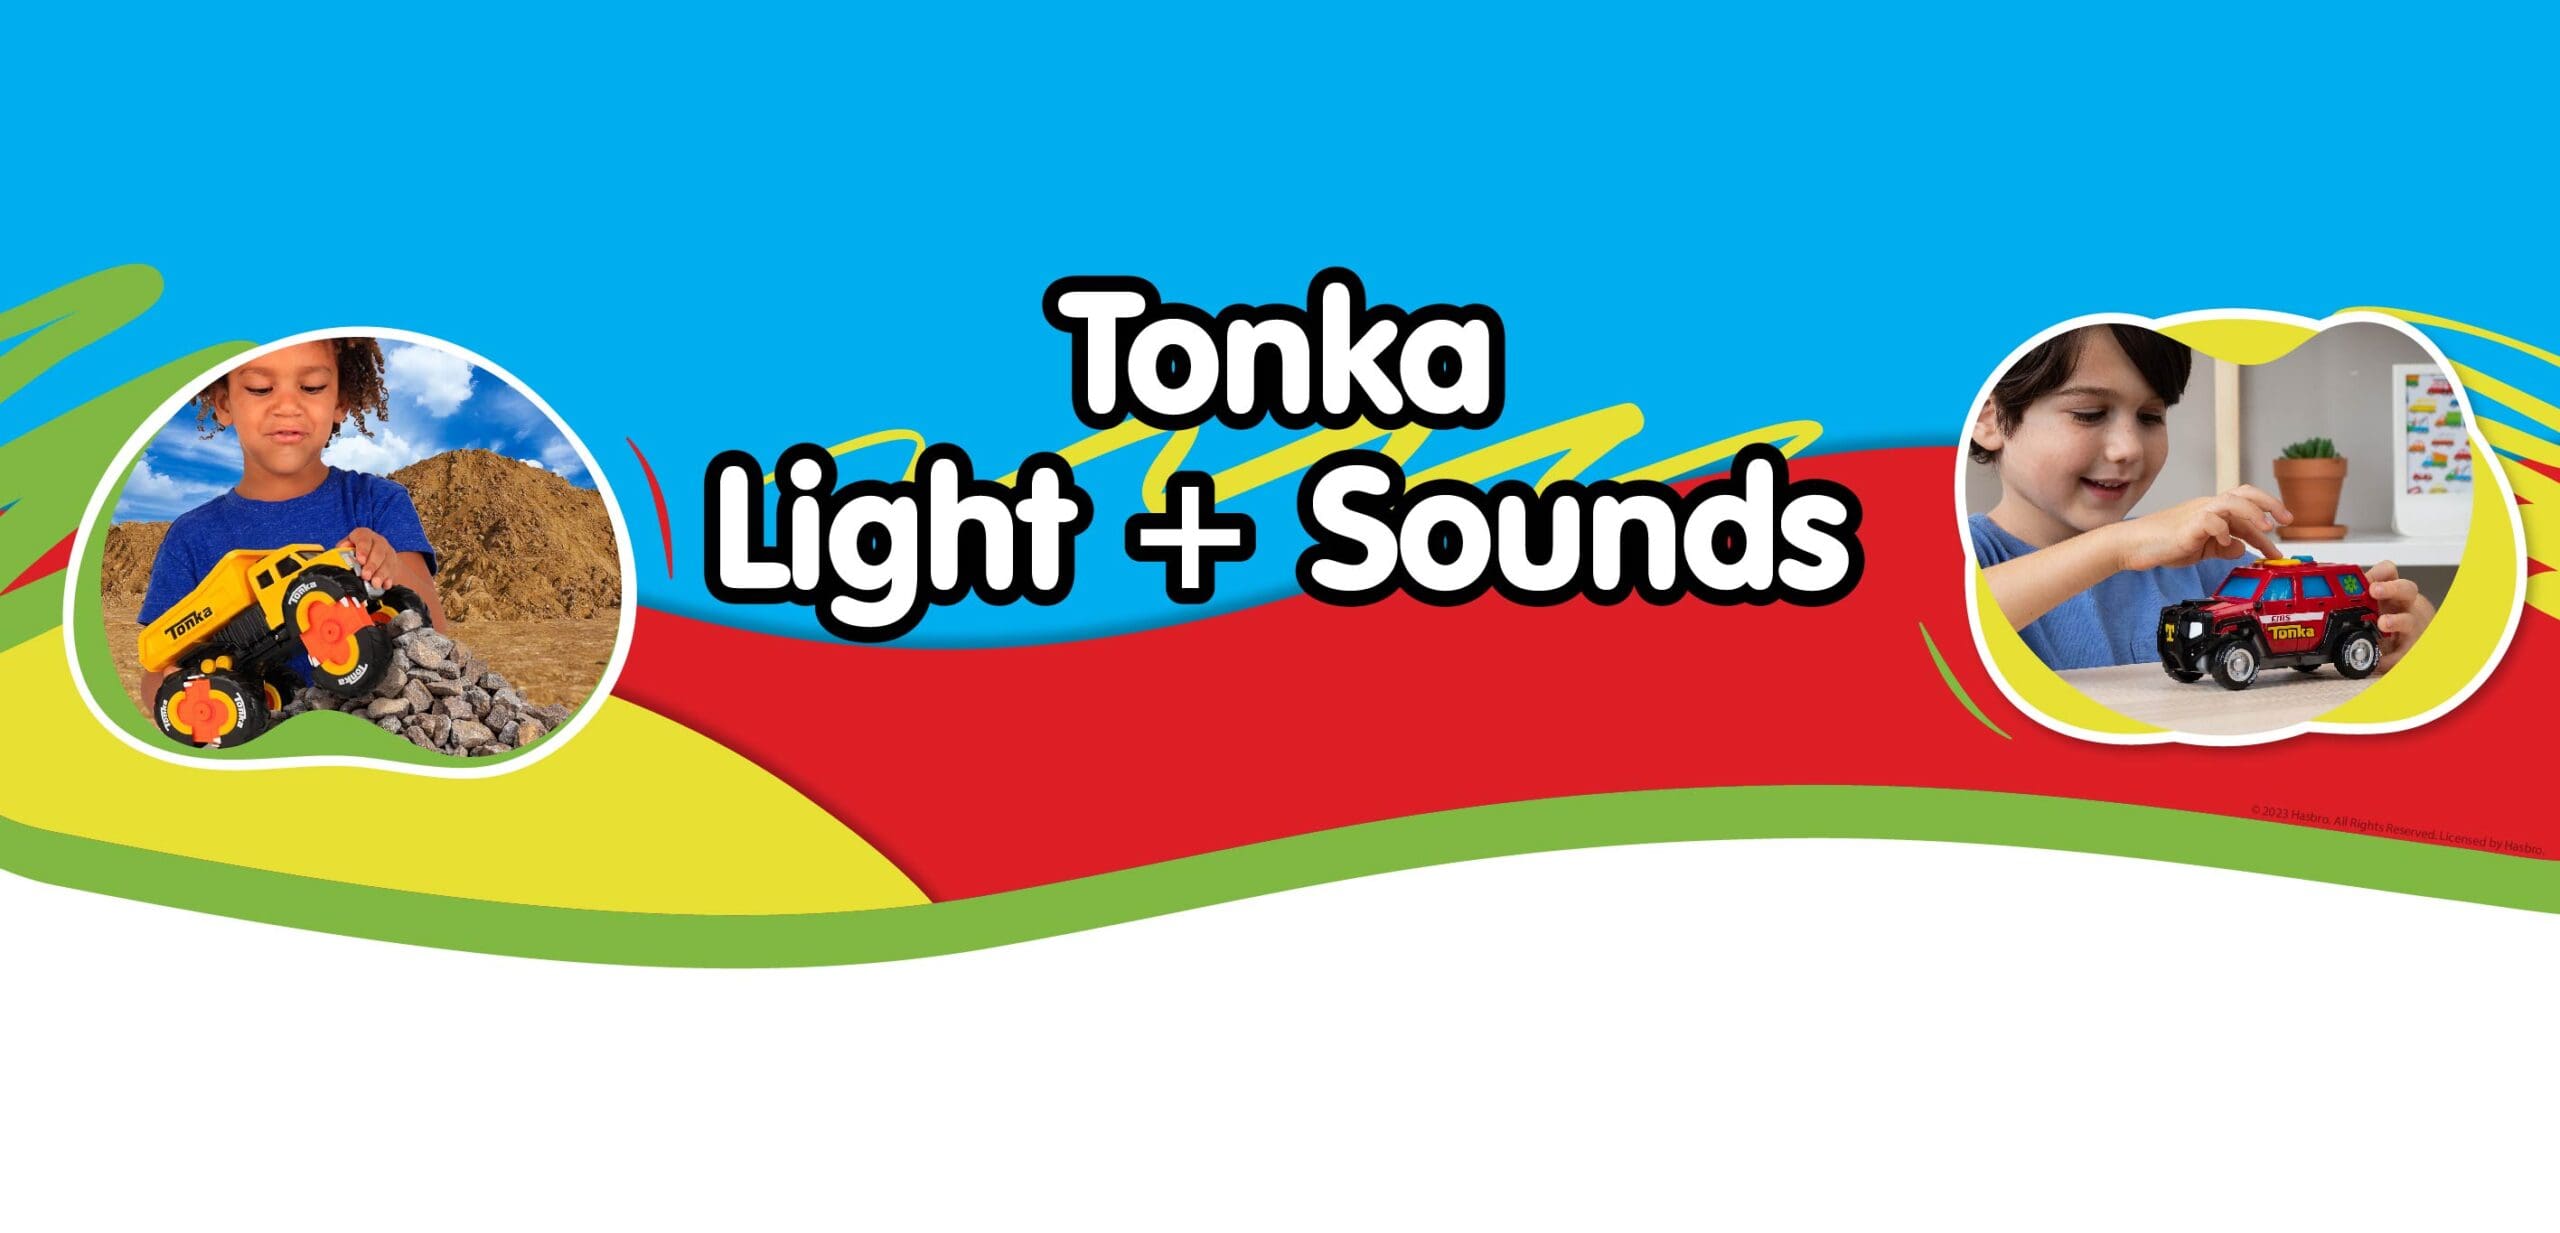 Tonka Light + Sounds banner